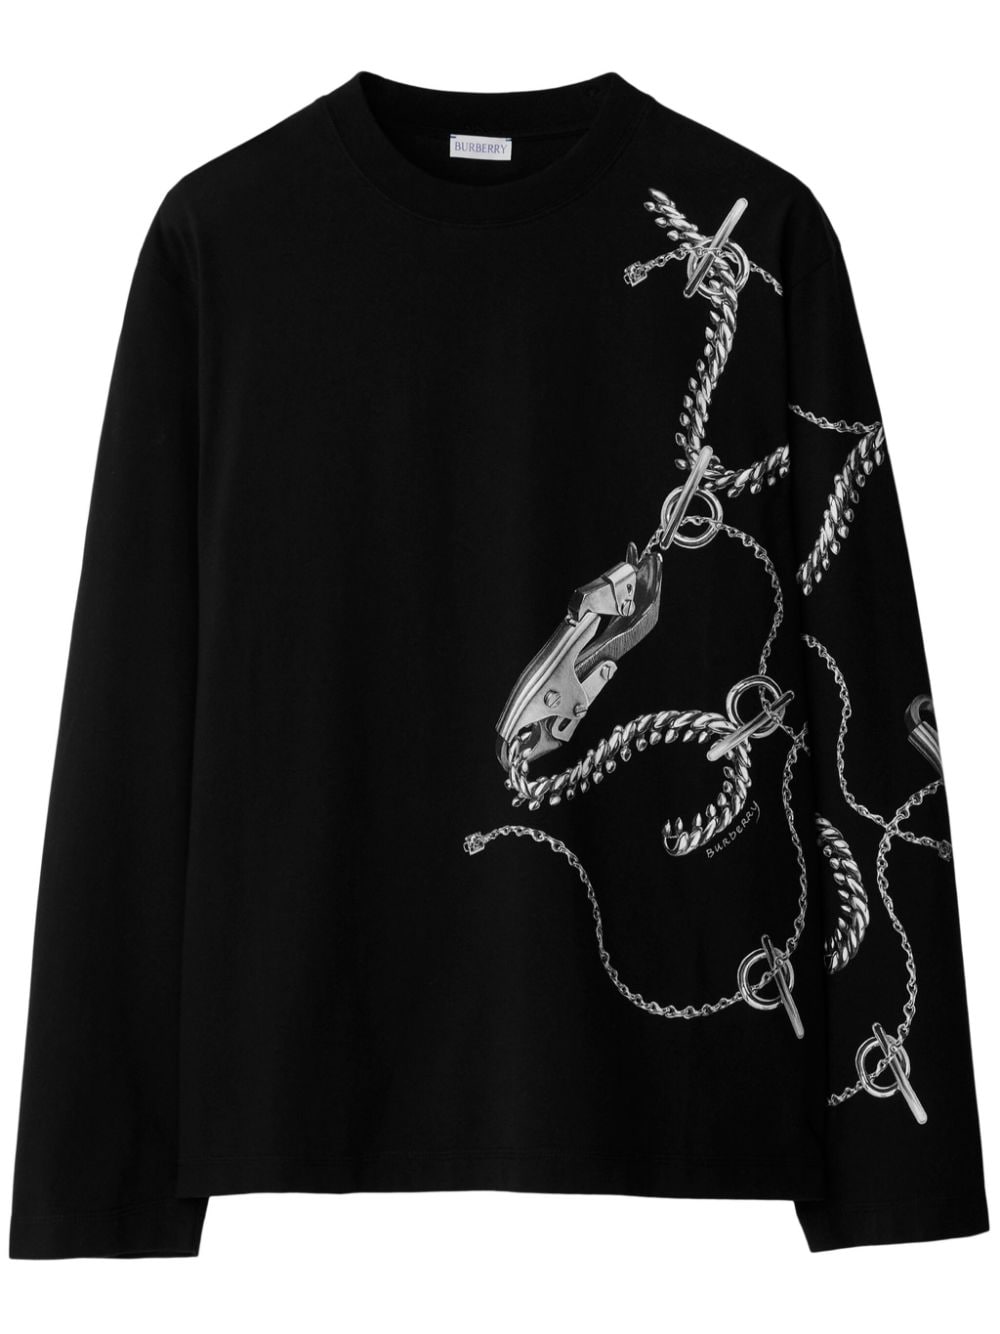 Burberry Katoenen sweater Zwart